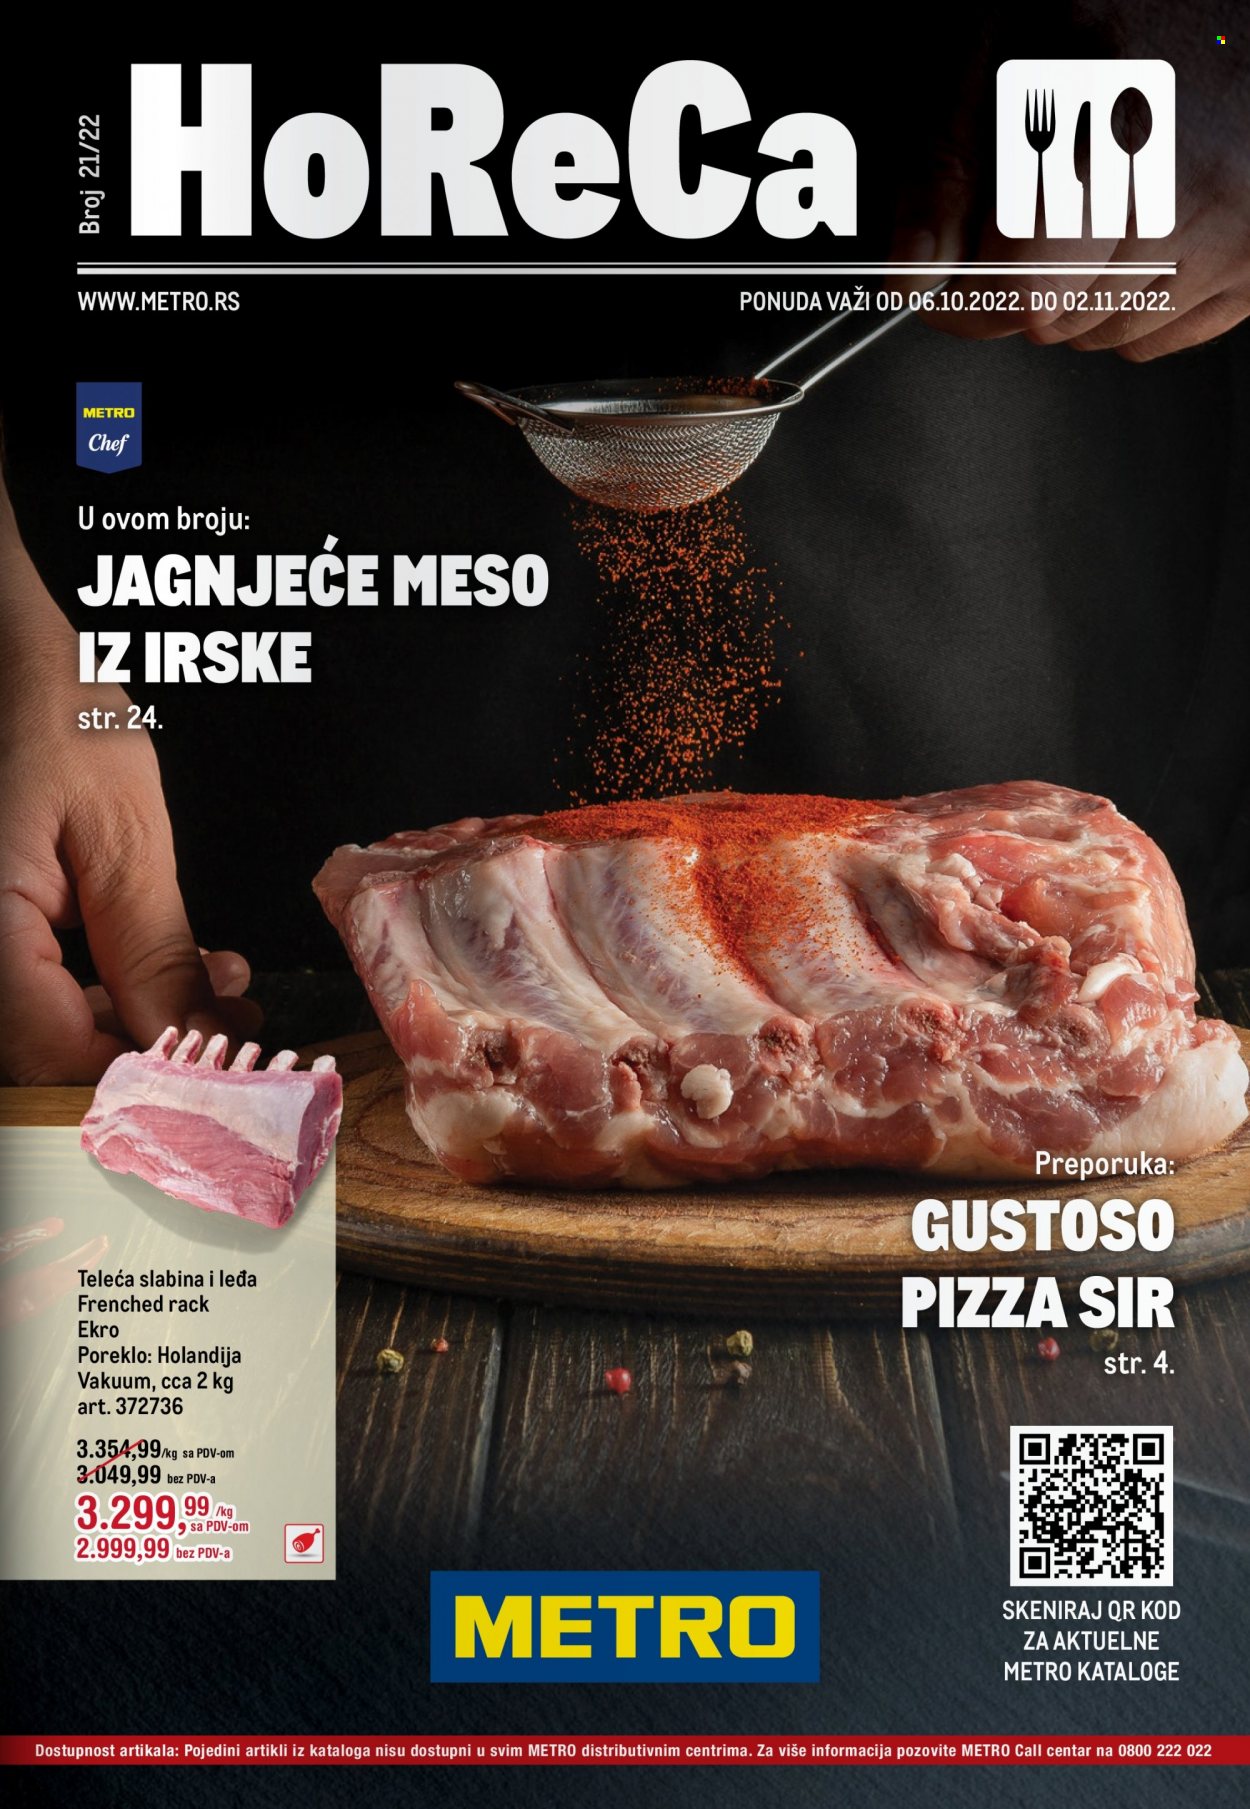 thumbnail - Metro katalog - 06.10.2022 - 02.11.2022 - Proizvodi na akciji - Metro Chef, teleće meso, teleća slabina, jagnjeće meso, sir pizza. Stranica 1.